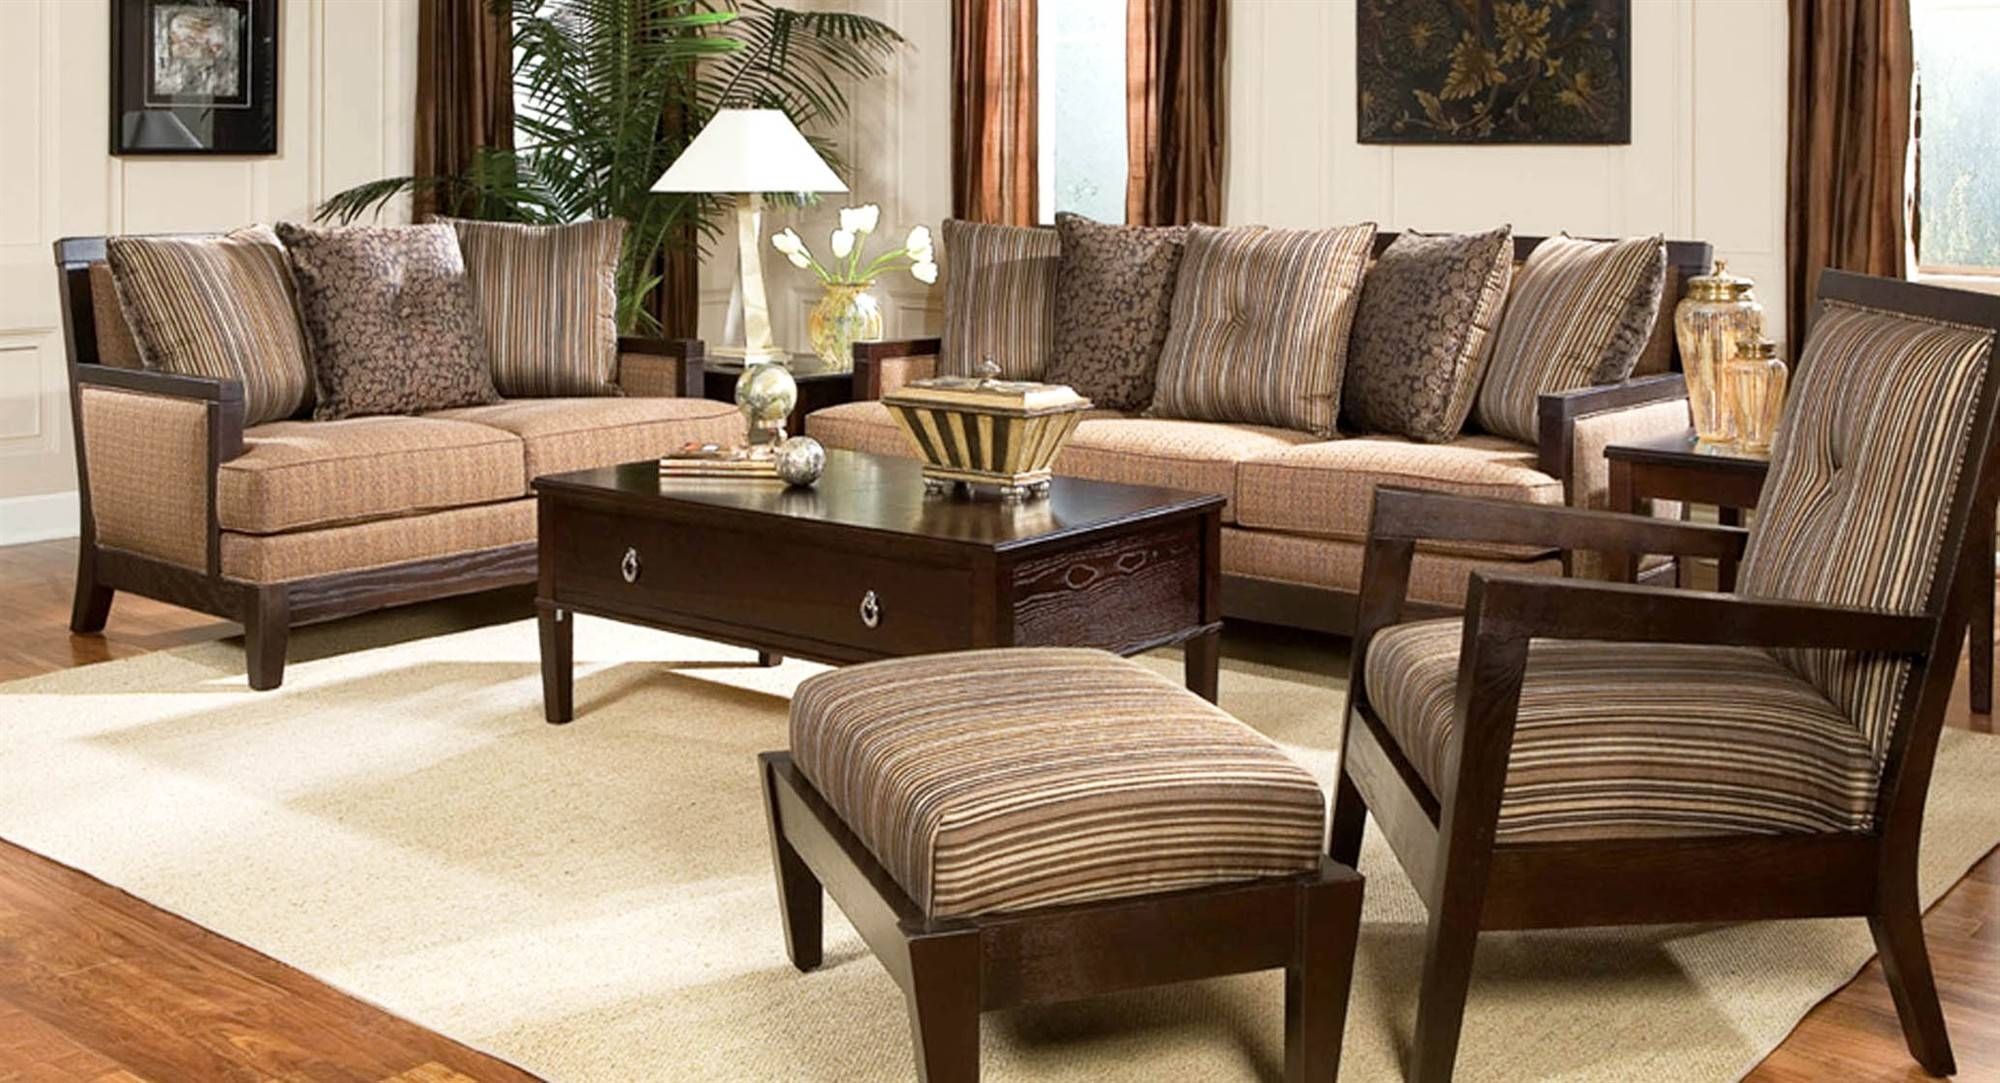 striped sofas living room furniture